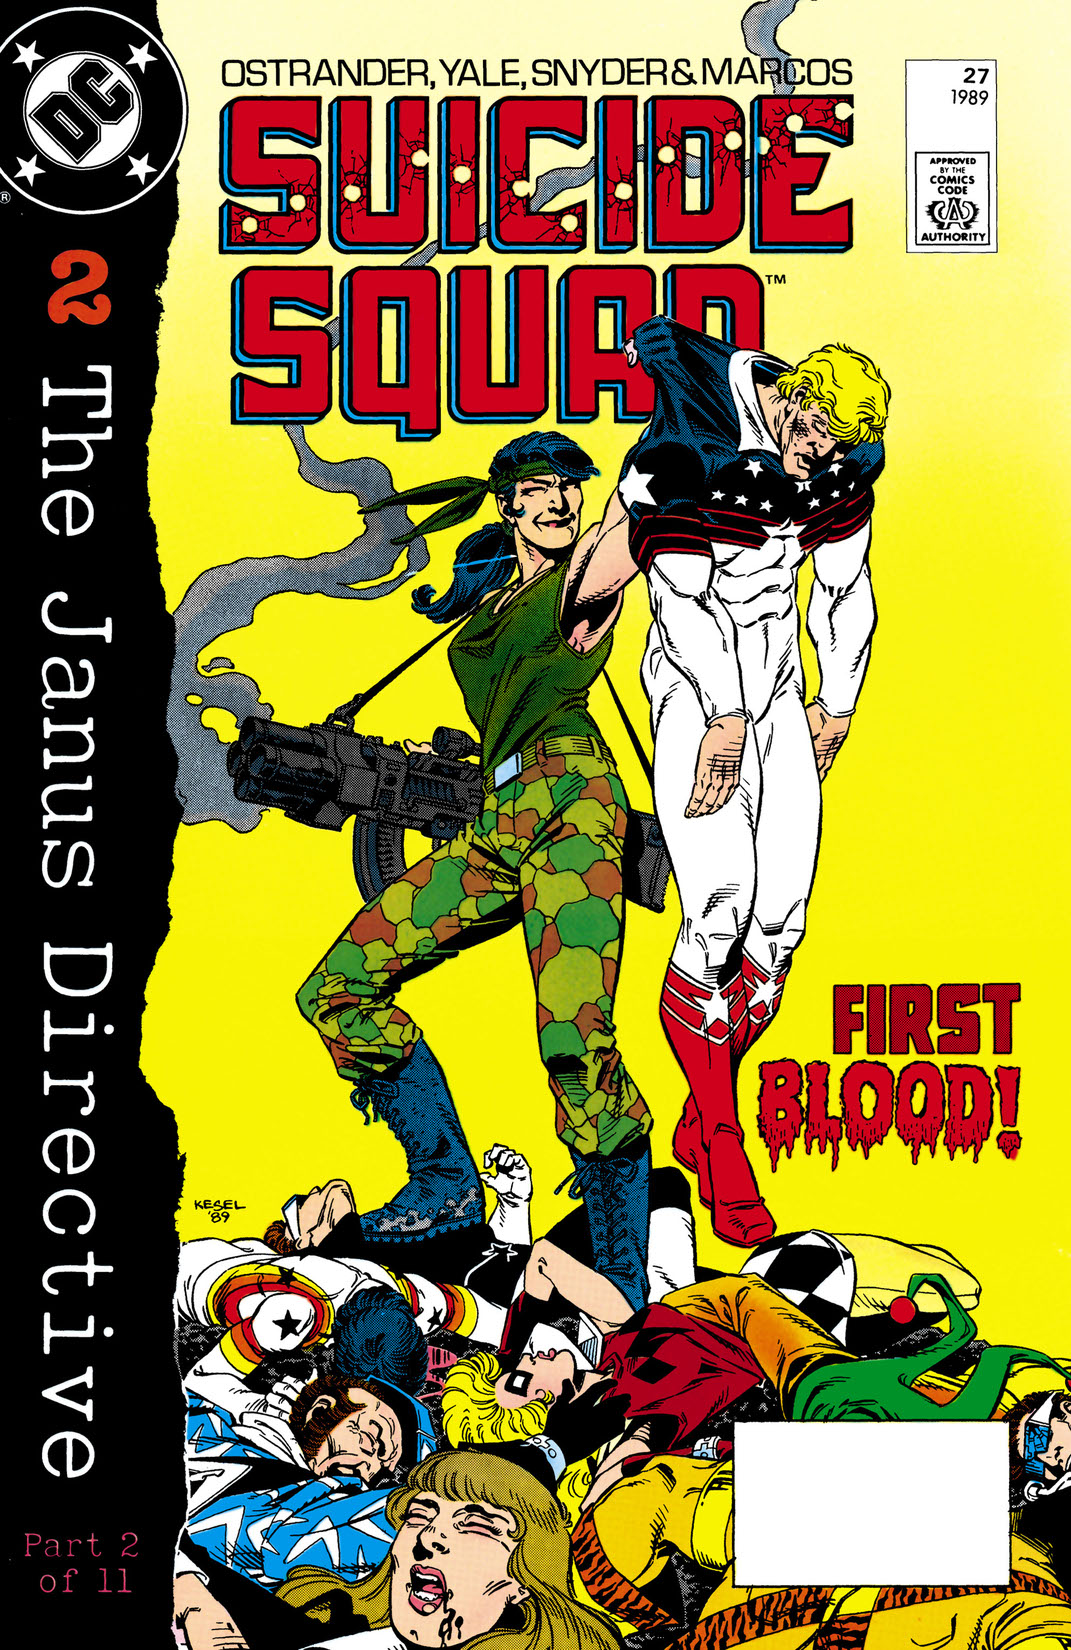 Suicide Squad (1987-) #27 preview images